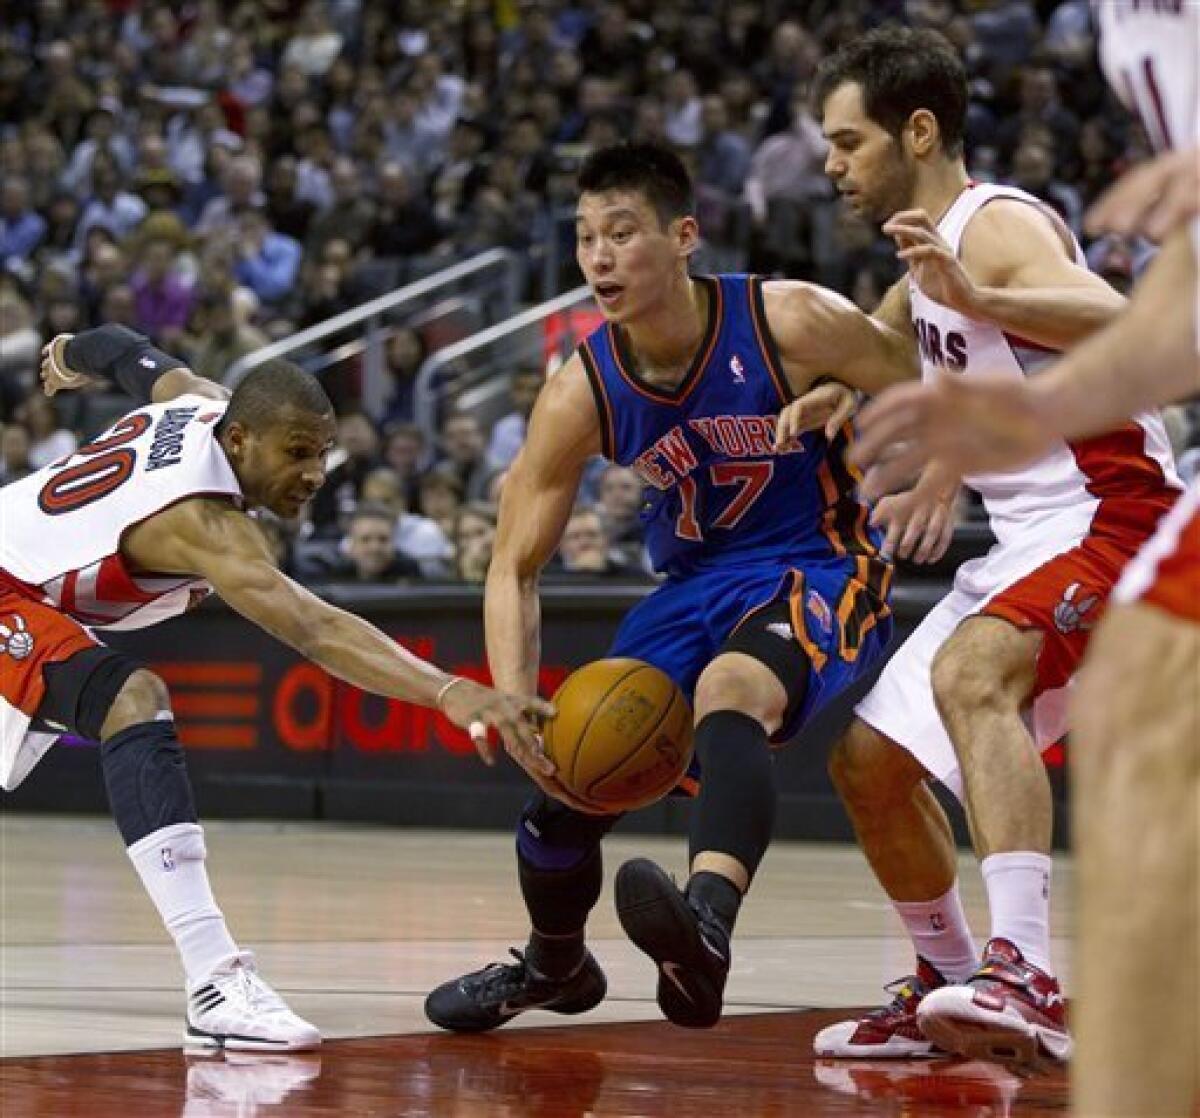 WATCH: Bulls win third-straight as DeRozan hits game-winner vs. Knicks